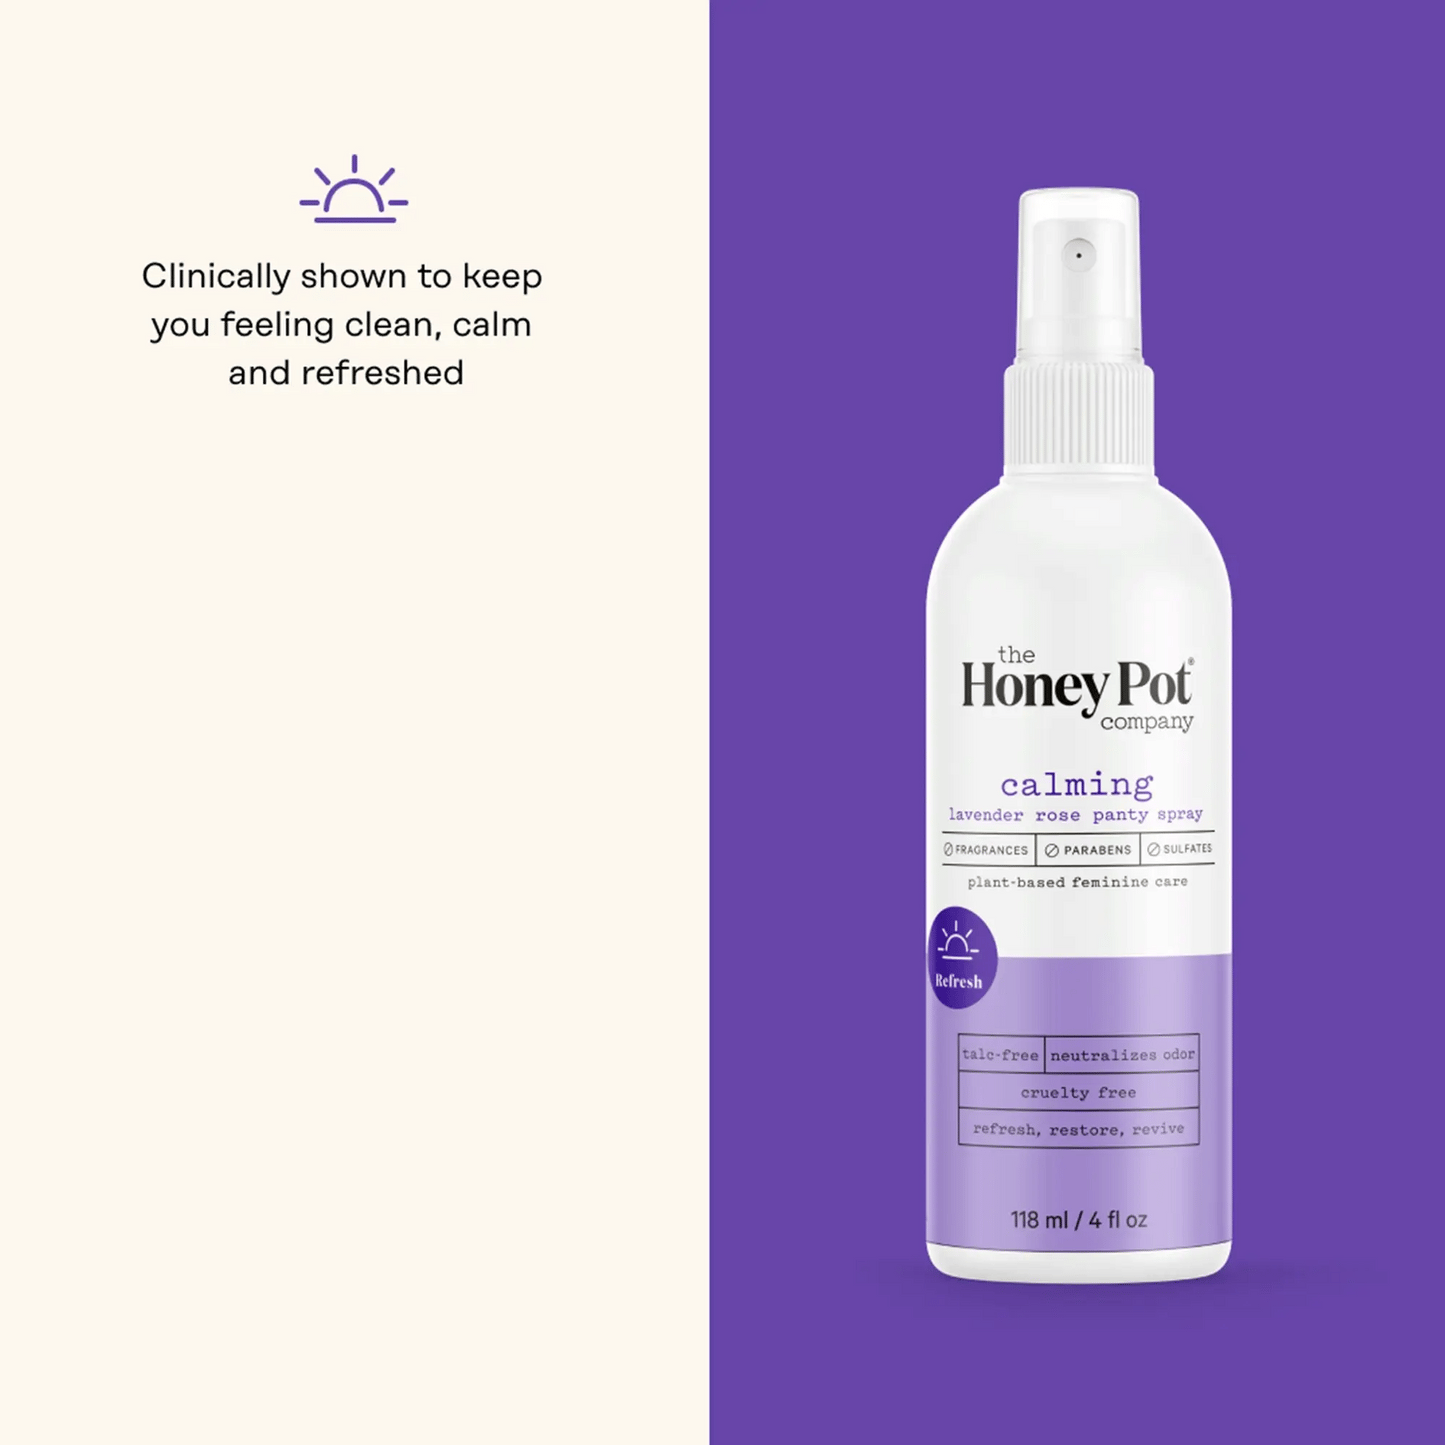 The Honey Pot - Calming Lavender Rose Panty Spray